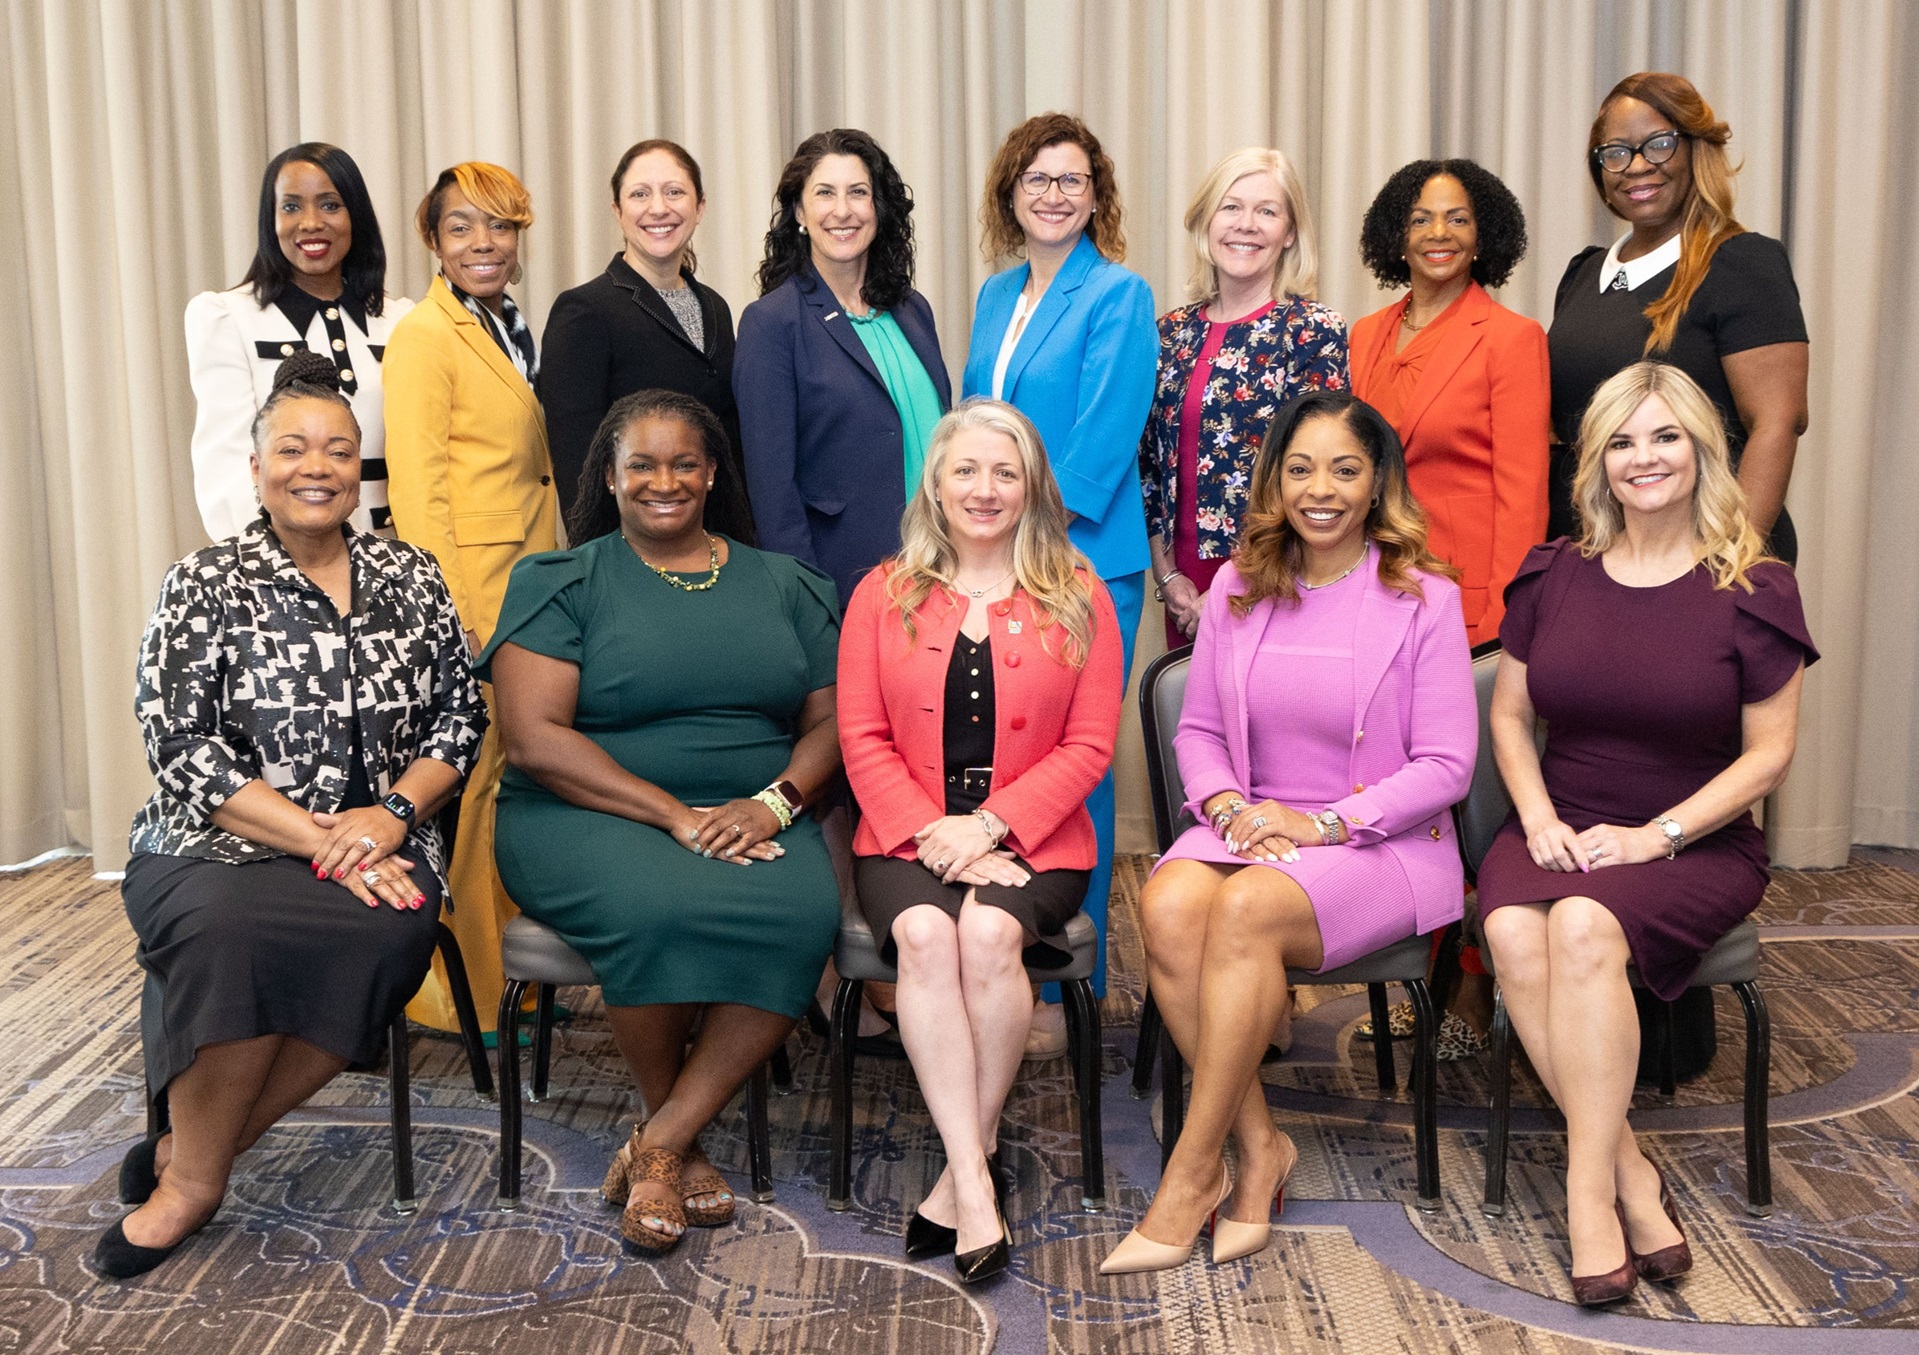 Women mobility business boards directors strategic (image: WTS International)